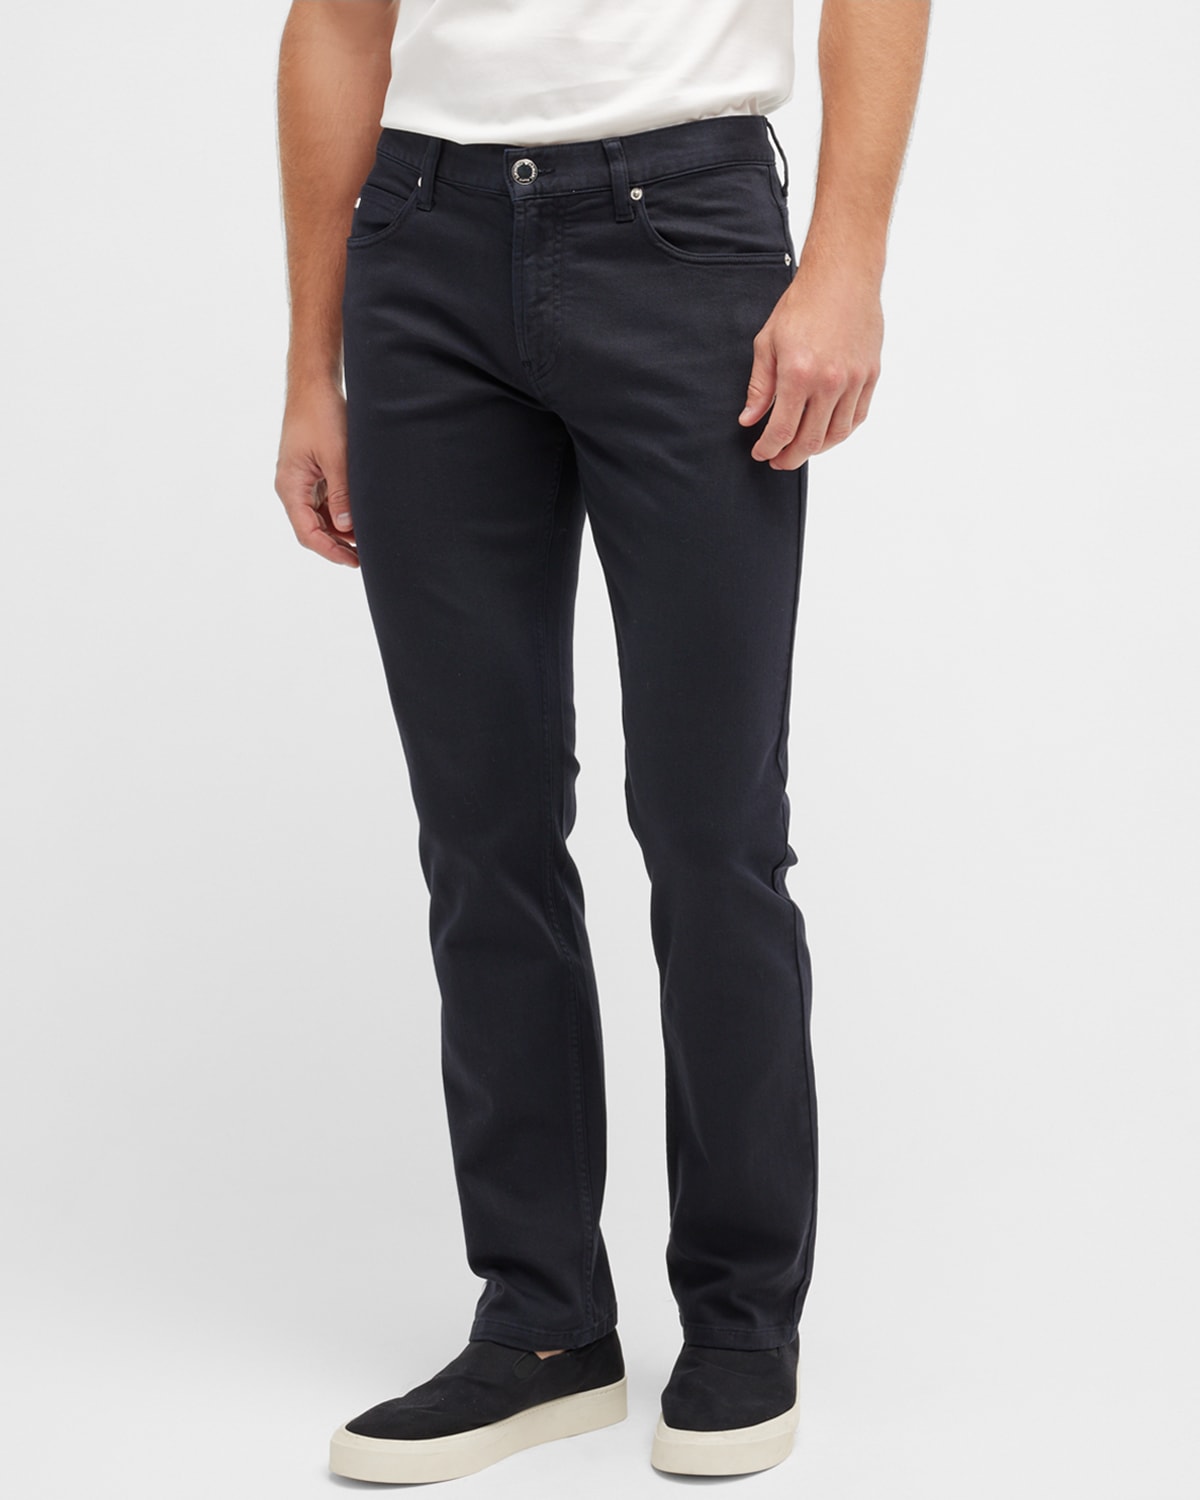 ZEGNA Men's Cotton-Stretch Denim Jeans | Neiman Marcus